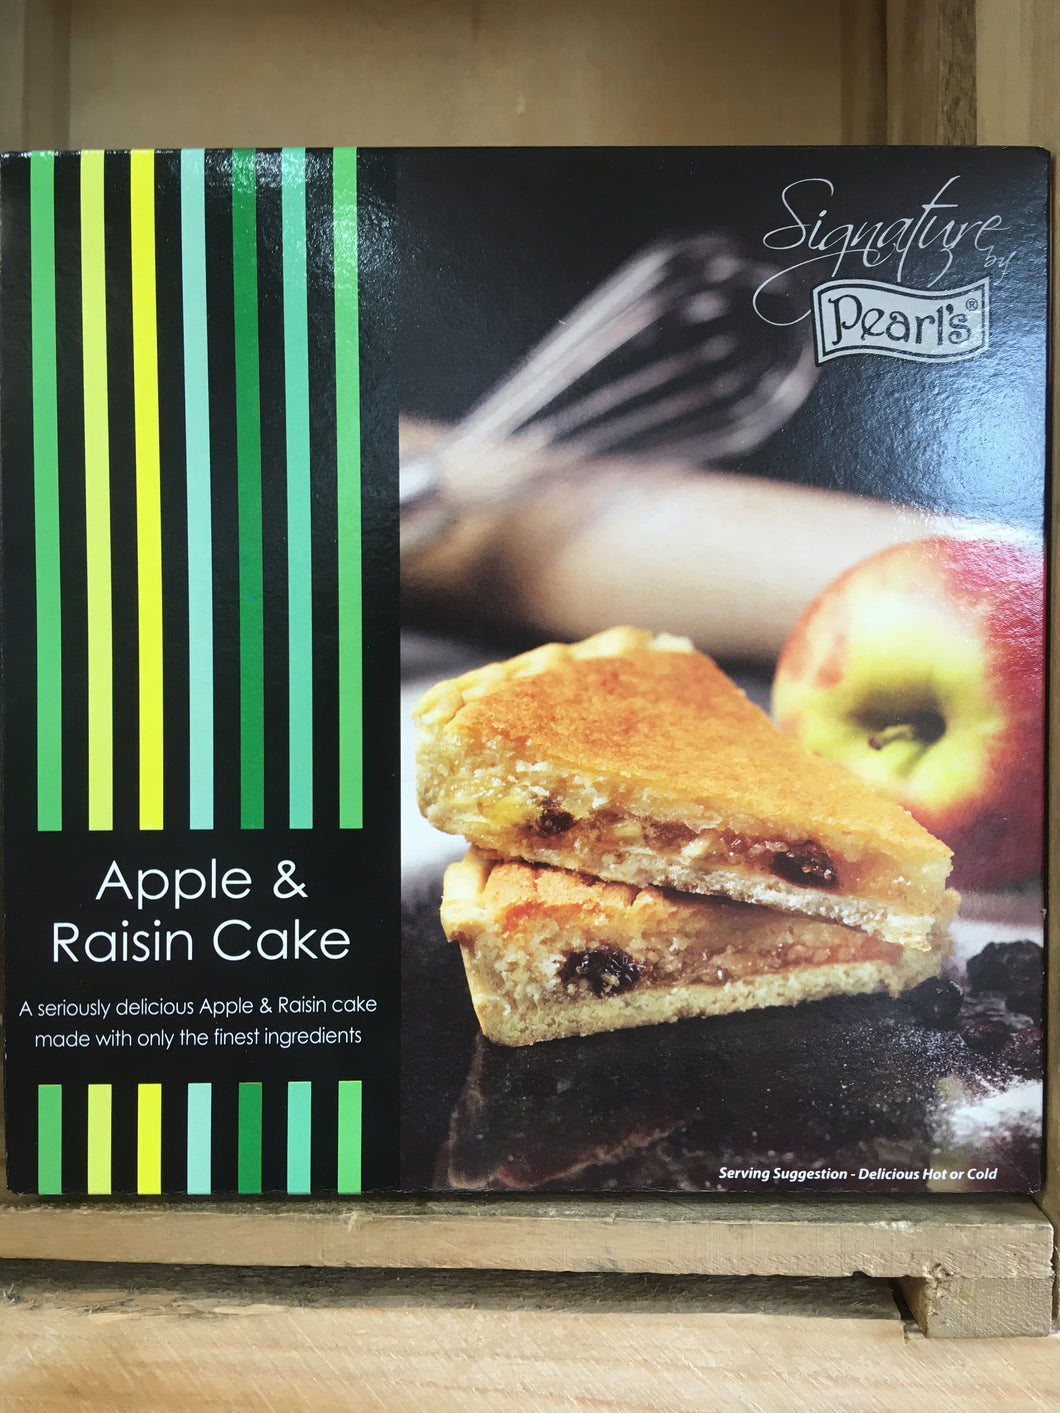 Pearl's Apple & Raisin Cake